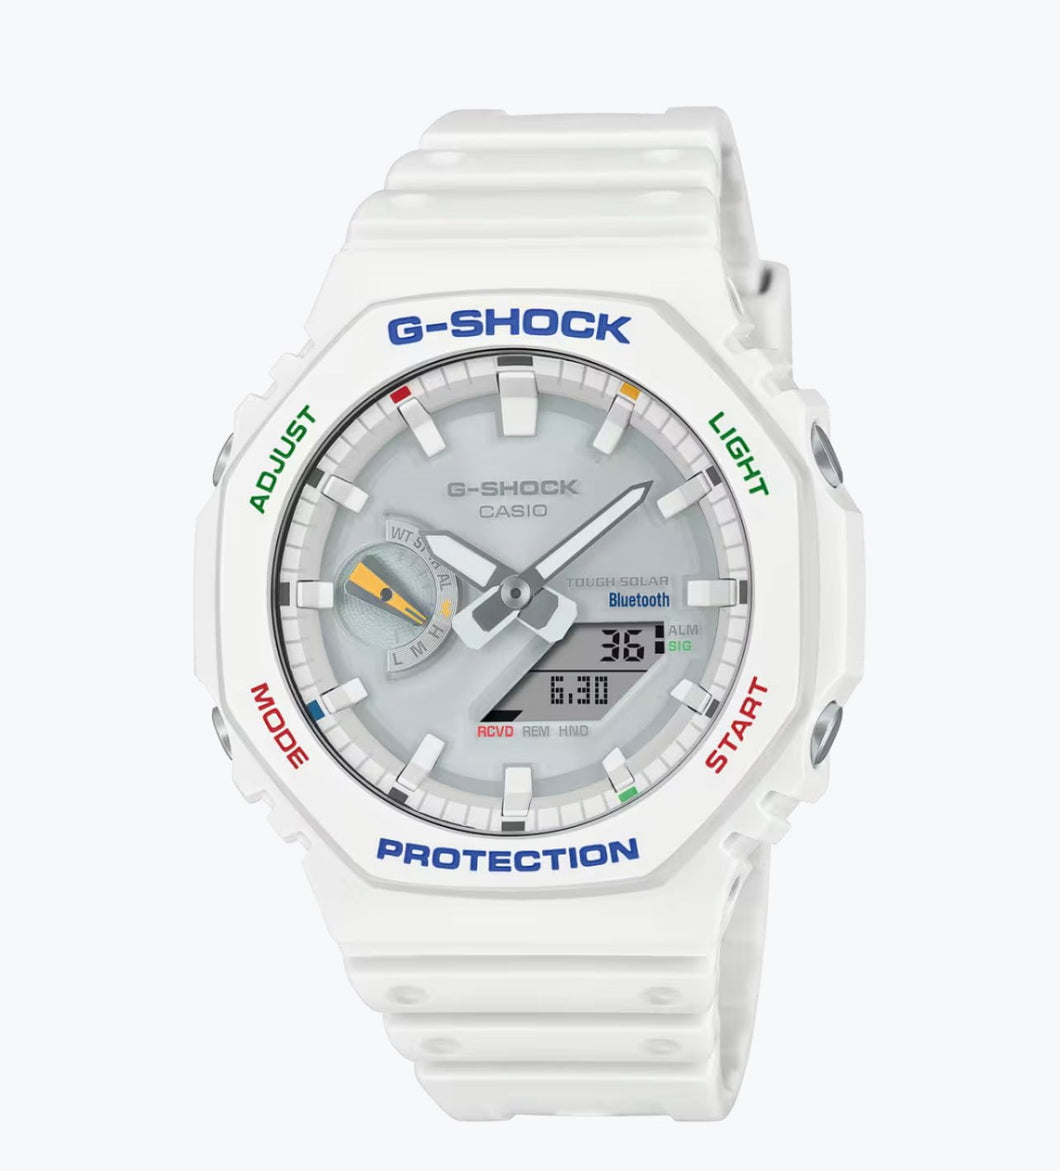 G-SHOCK ANALOG-DIGITAL
2100 Series
GAB2100FC-7A